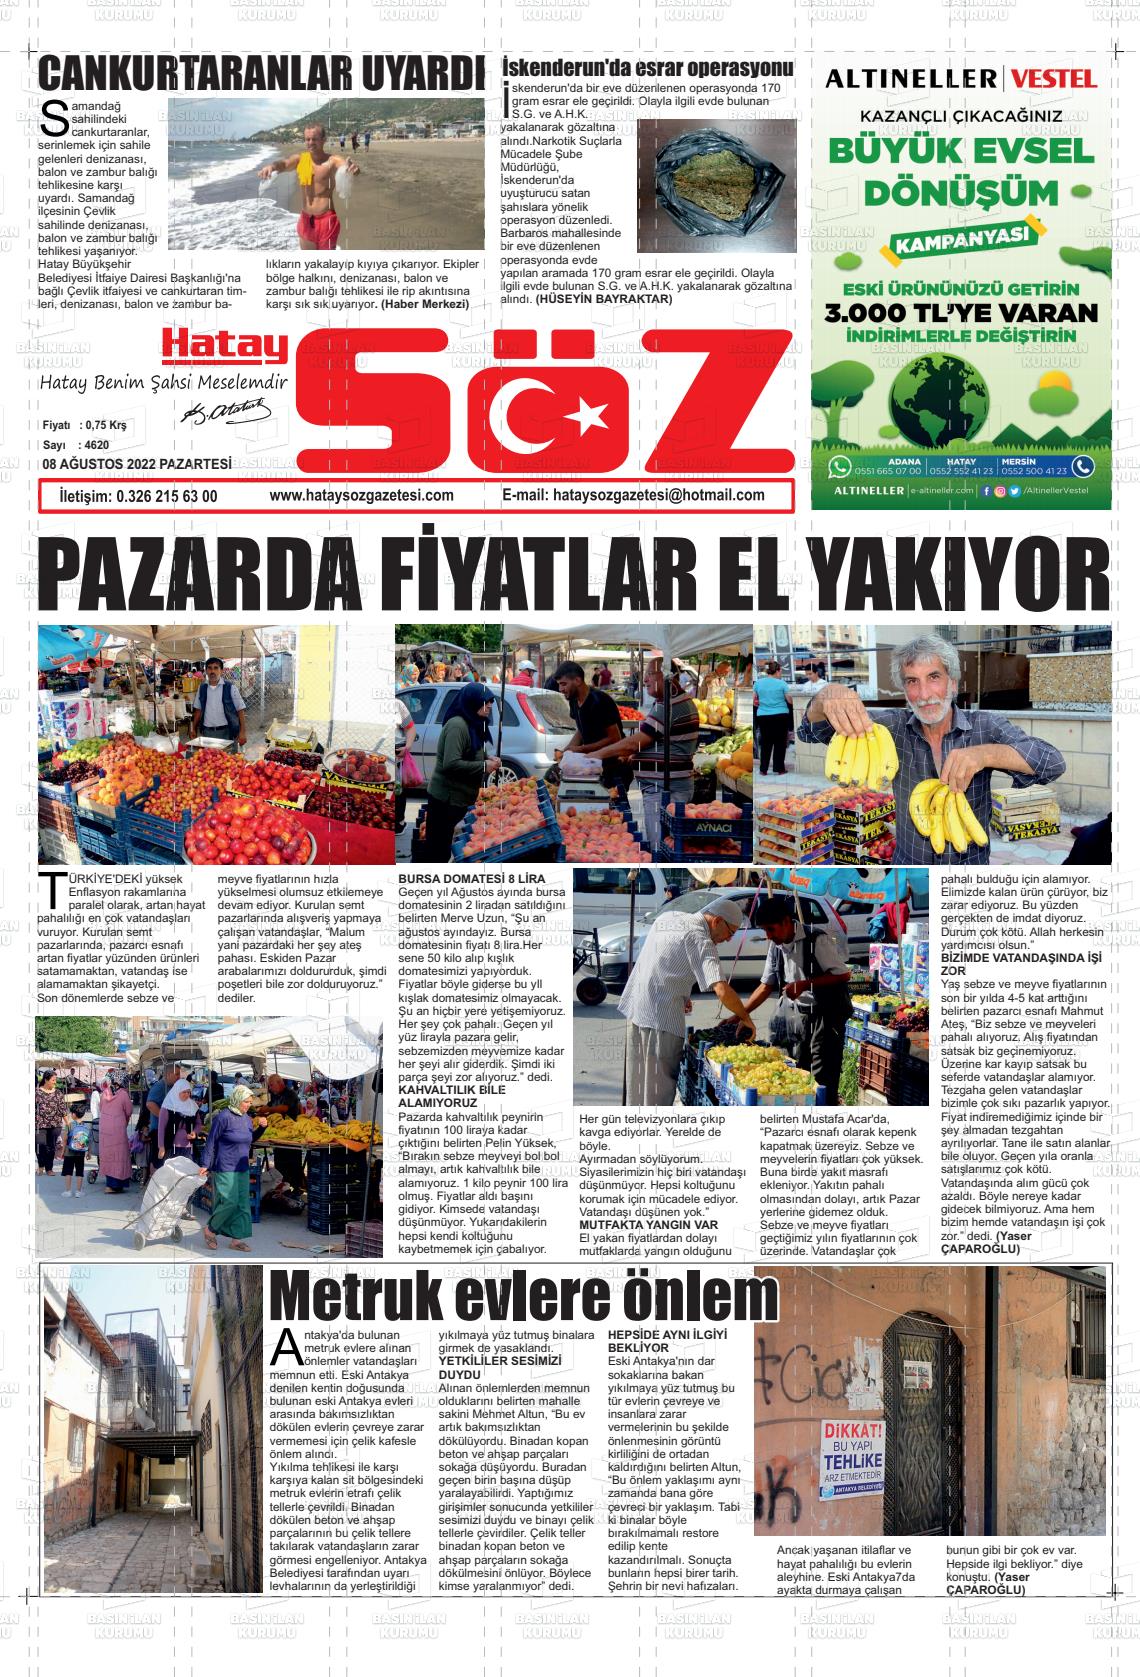 08 Ağustos 2022 Hatay Söz Gazete Manşeti